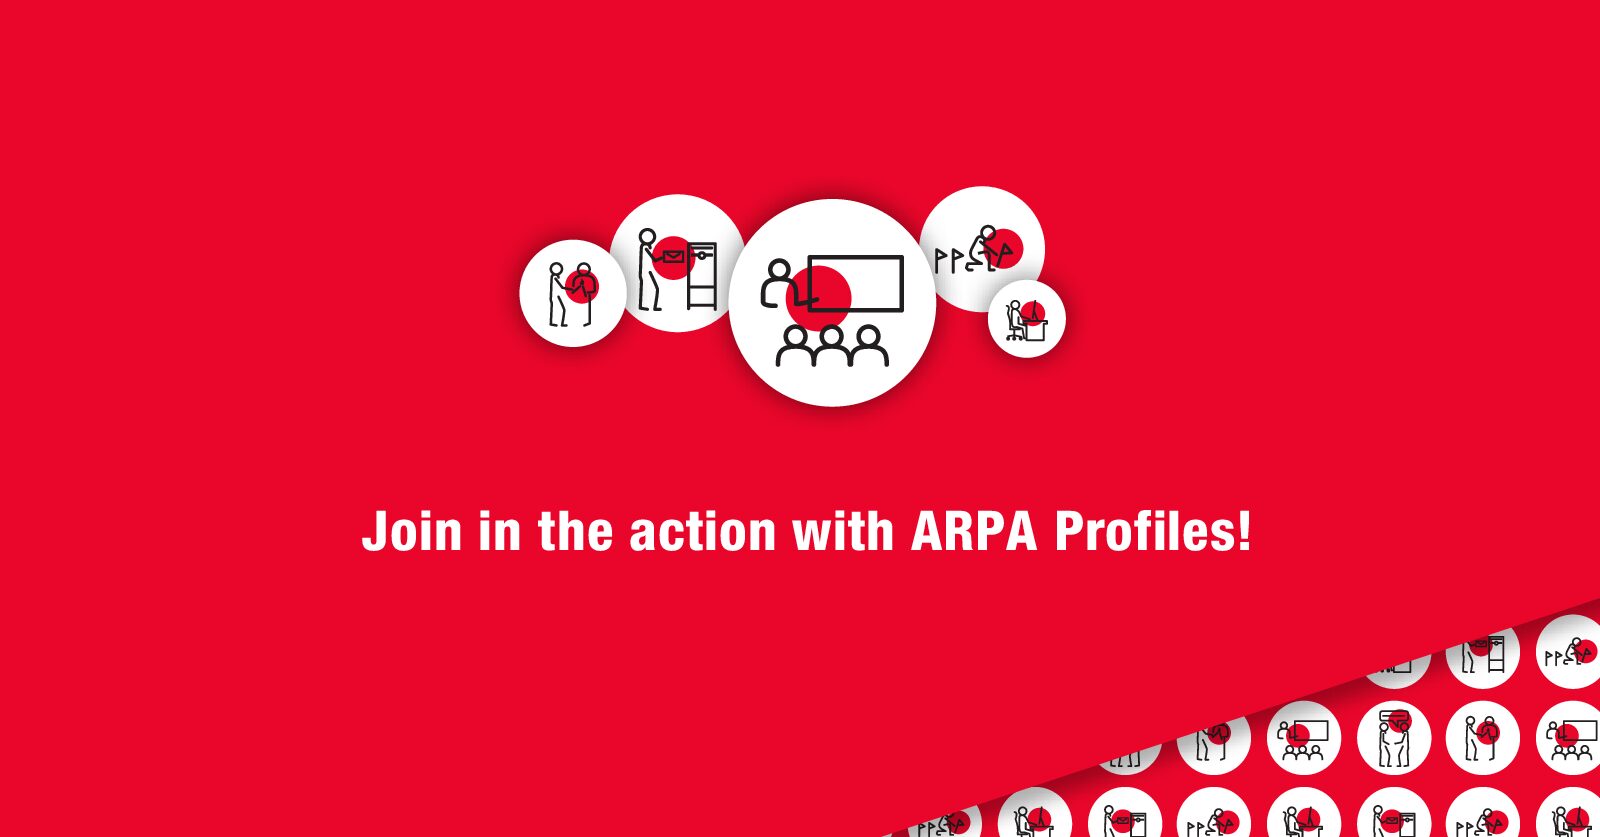 ARPA Profiles